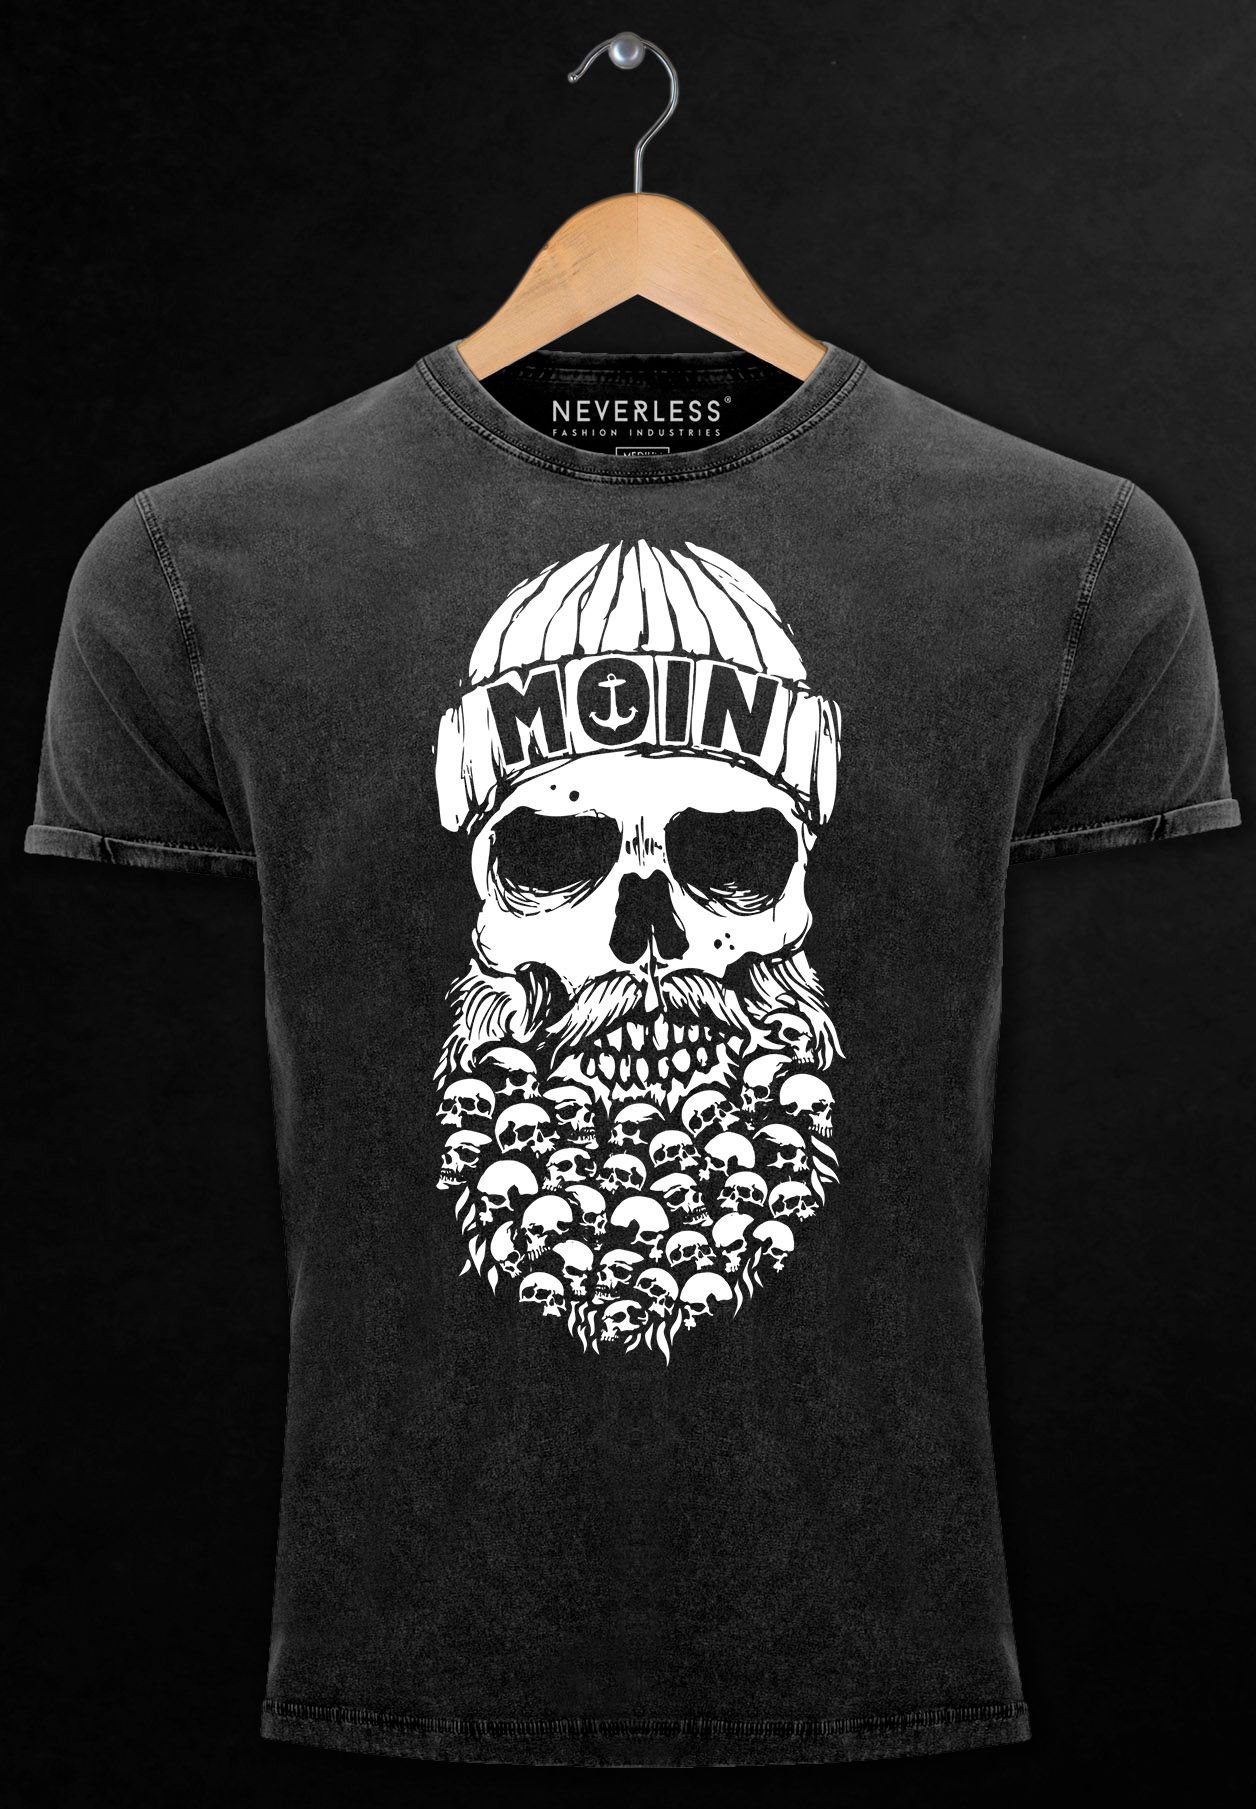 Herren Dialekt Nordisch Hamburg Neverless schwarz Vintage Moin Ank mit Print-Shirt Skull Shirt Totenkopf Print